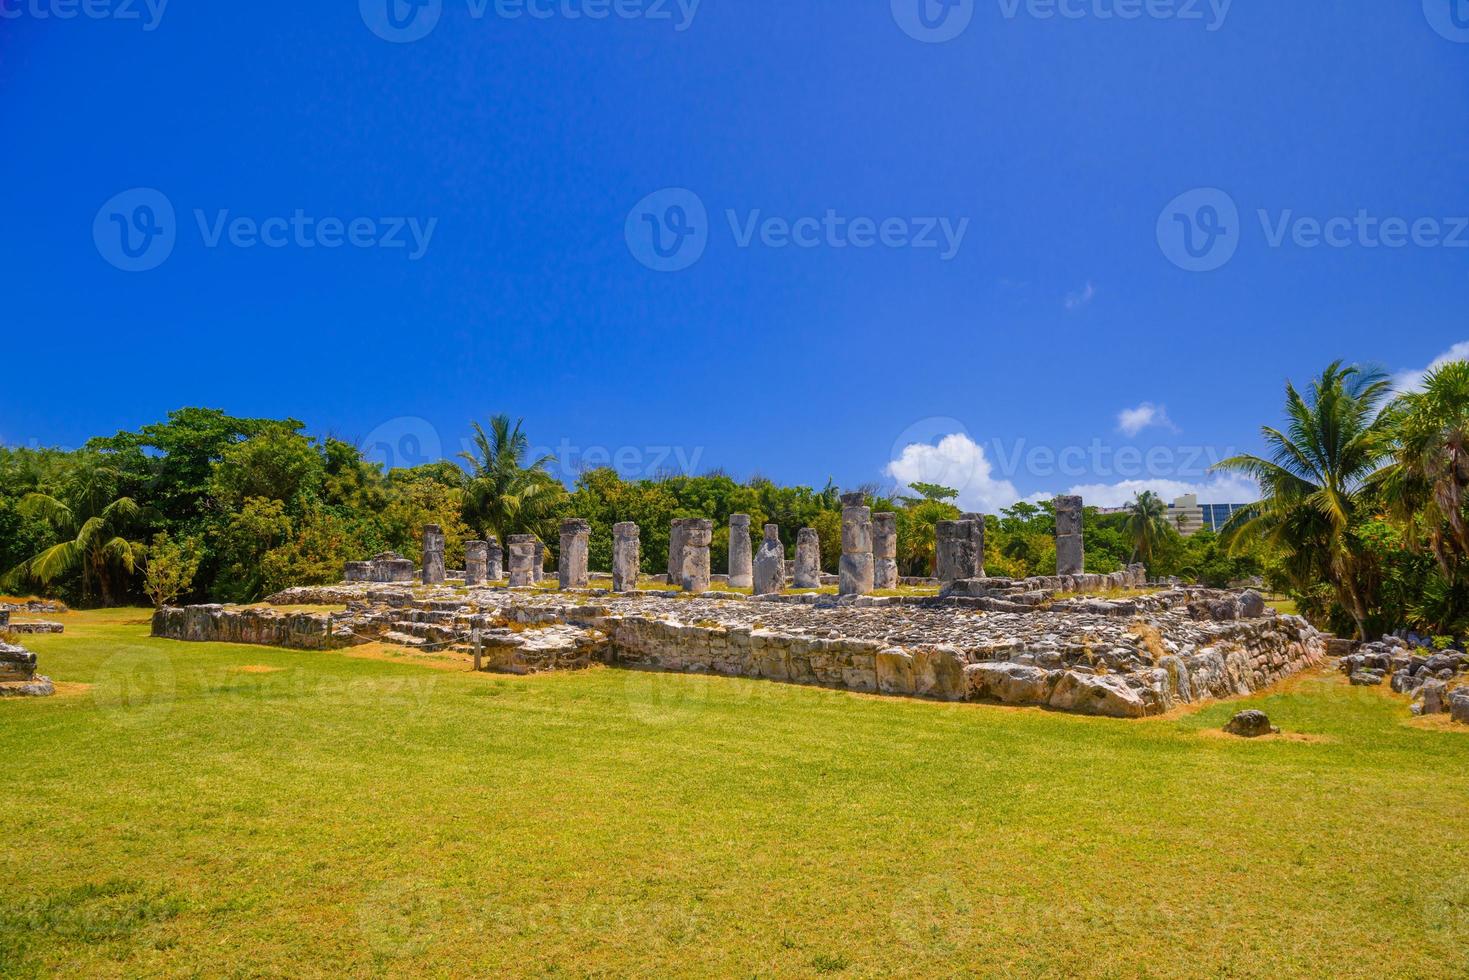 forntida ruiner av maya i el reys arkeologiska zon nära cancun, yukatan, mexico foto